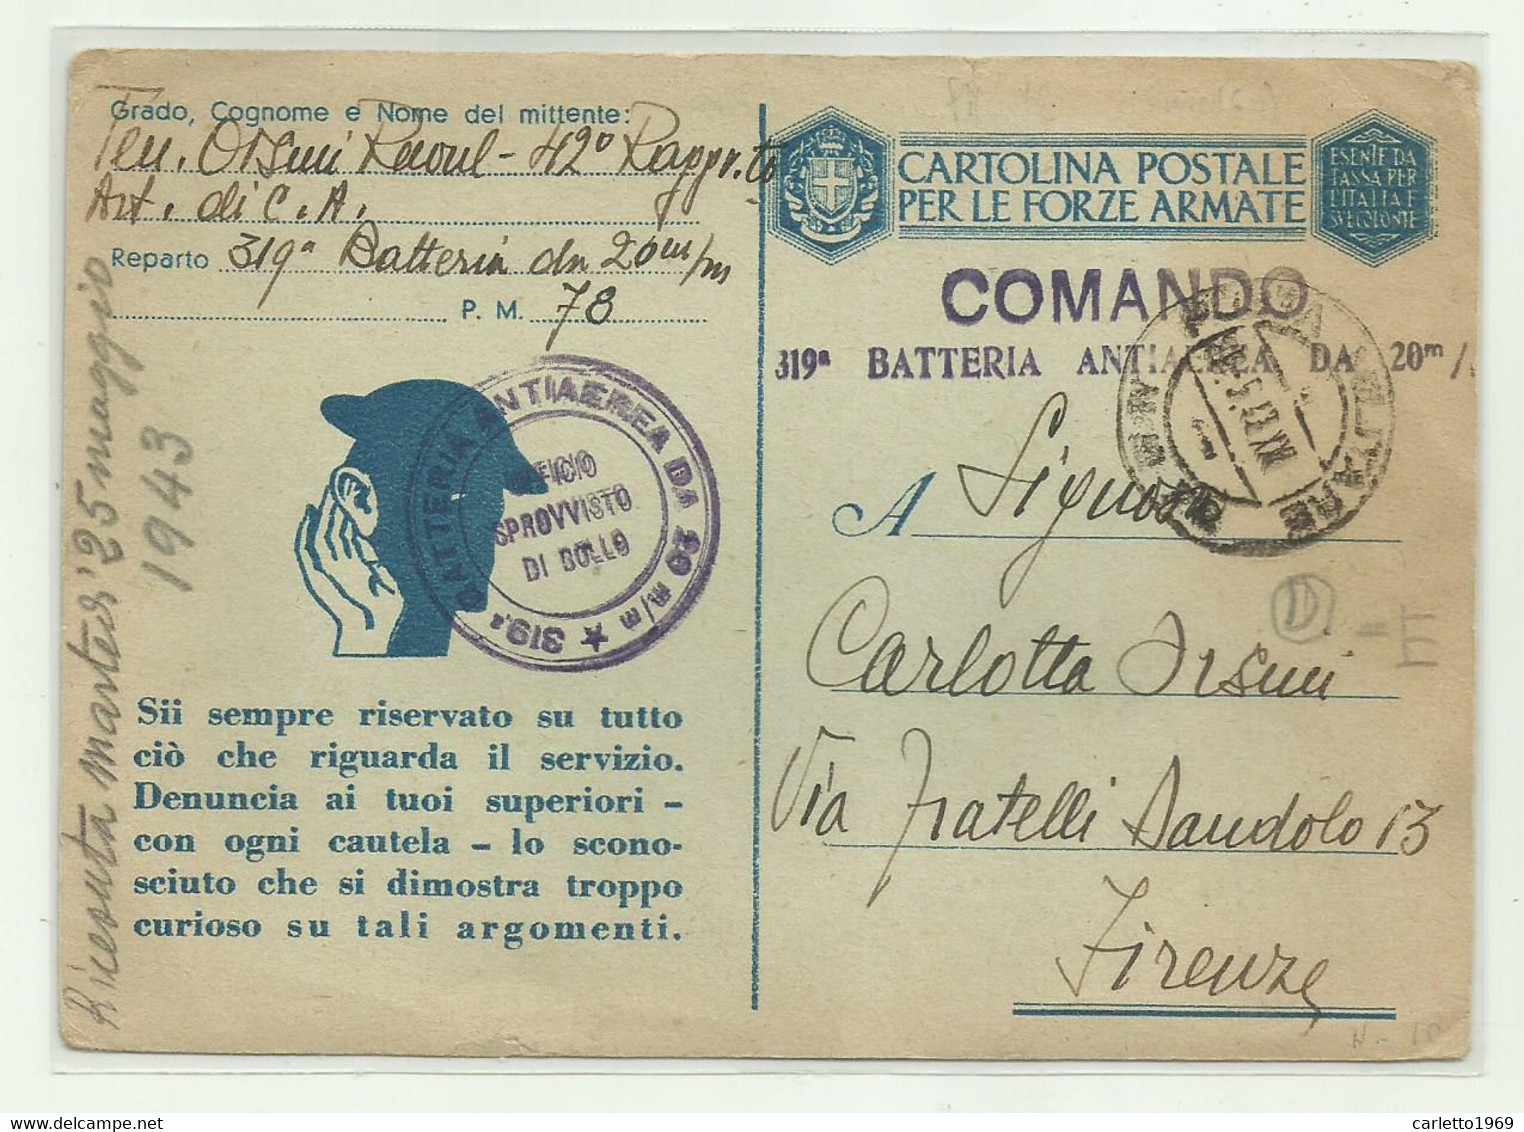 CARTOLINA  FORZE ARMATE - COMANDO 319a BATTERIA ANTIAEREA DA 20 Mm. - PM  78 - Stamped Stationery